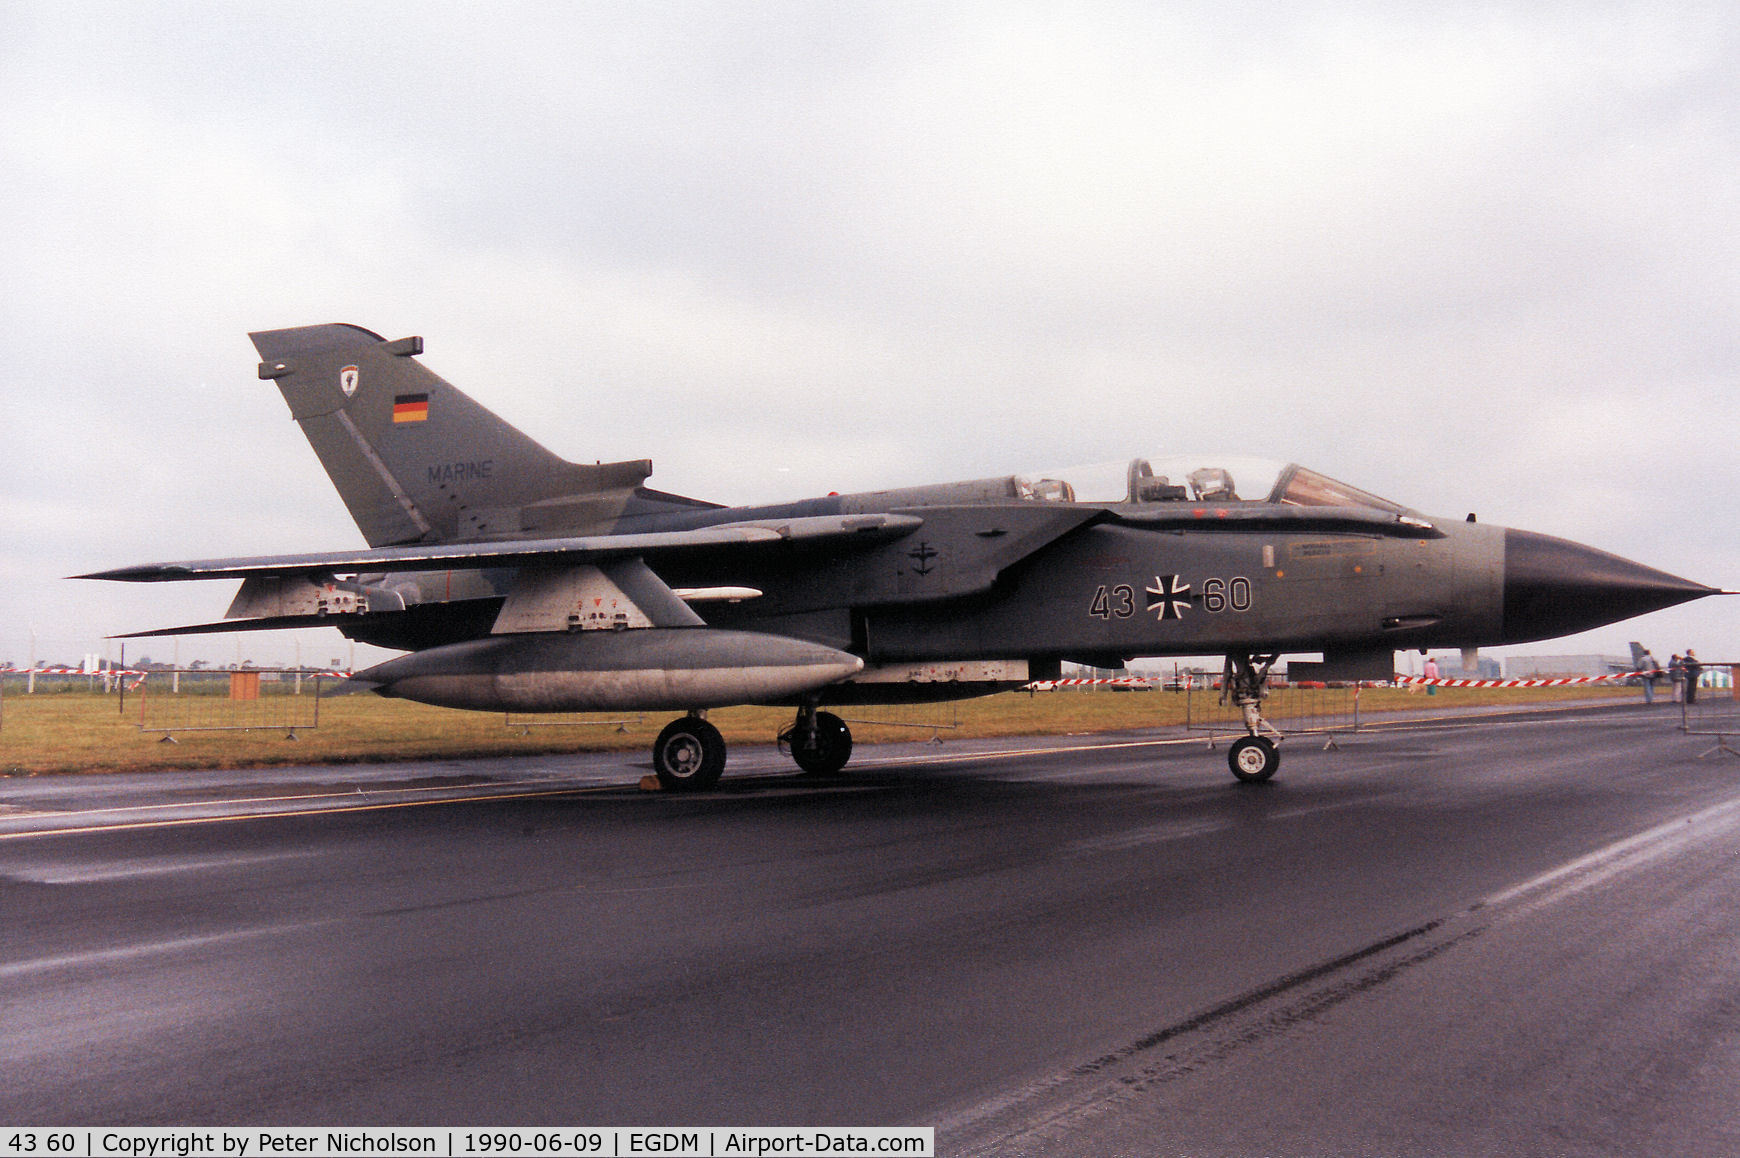 43 60, Panavia Tornado IDS C/N 160/GS033/4060, Tornado IDS, callsign German Navy 4598, of MFG-1 on display at the 1990 Boscombe Down Battle of Britain 50th Anniversary Airshow.